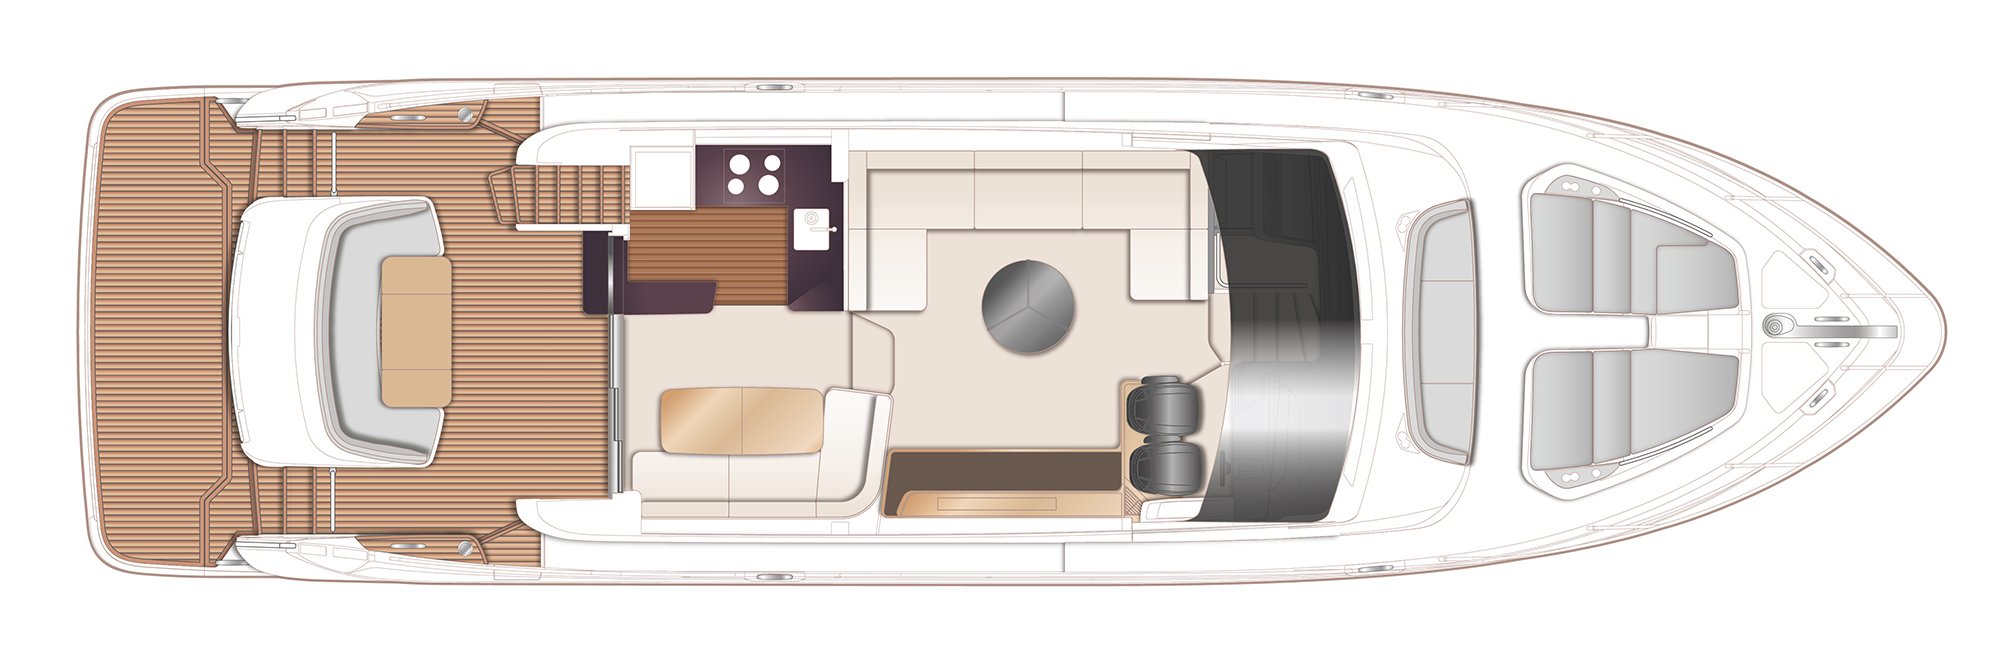 Princess_Yachts_Australia_F58-layout-main-deck.jpg